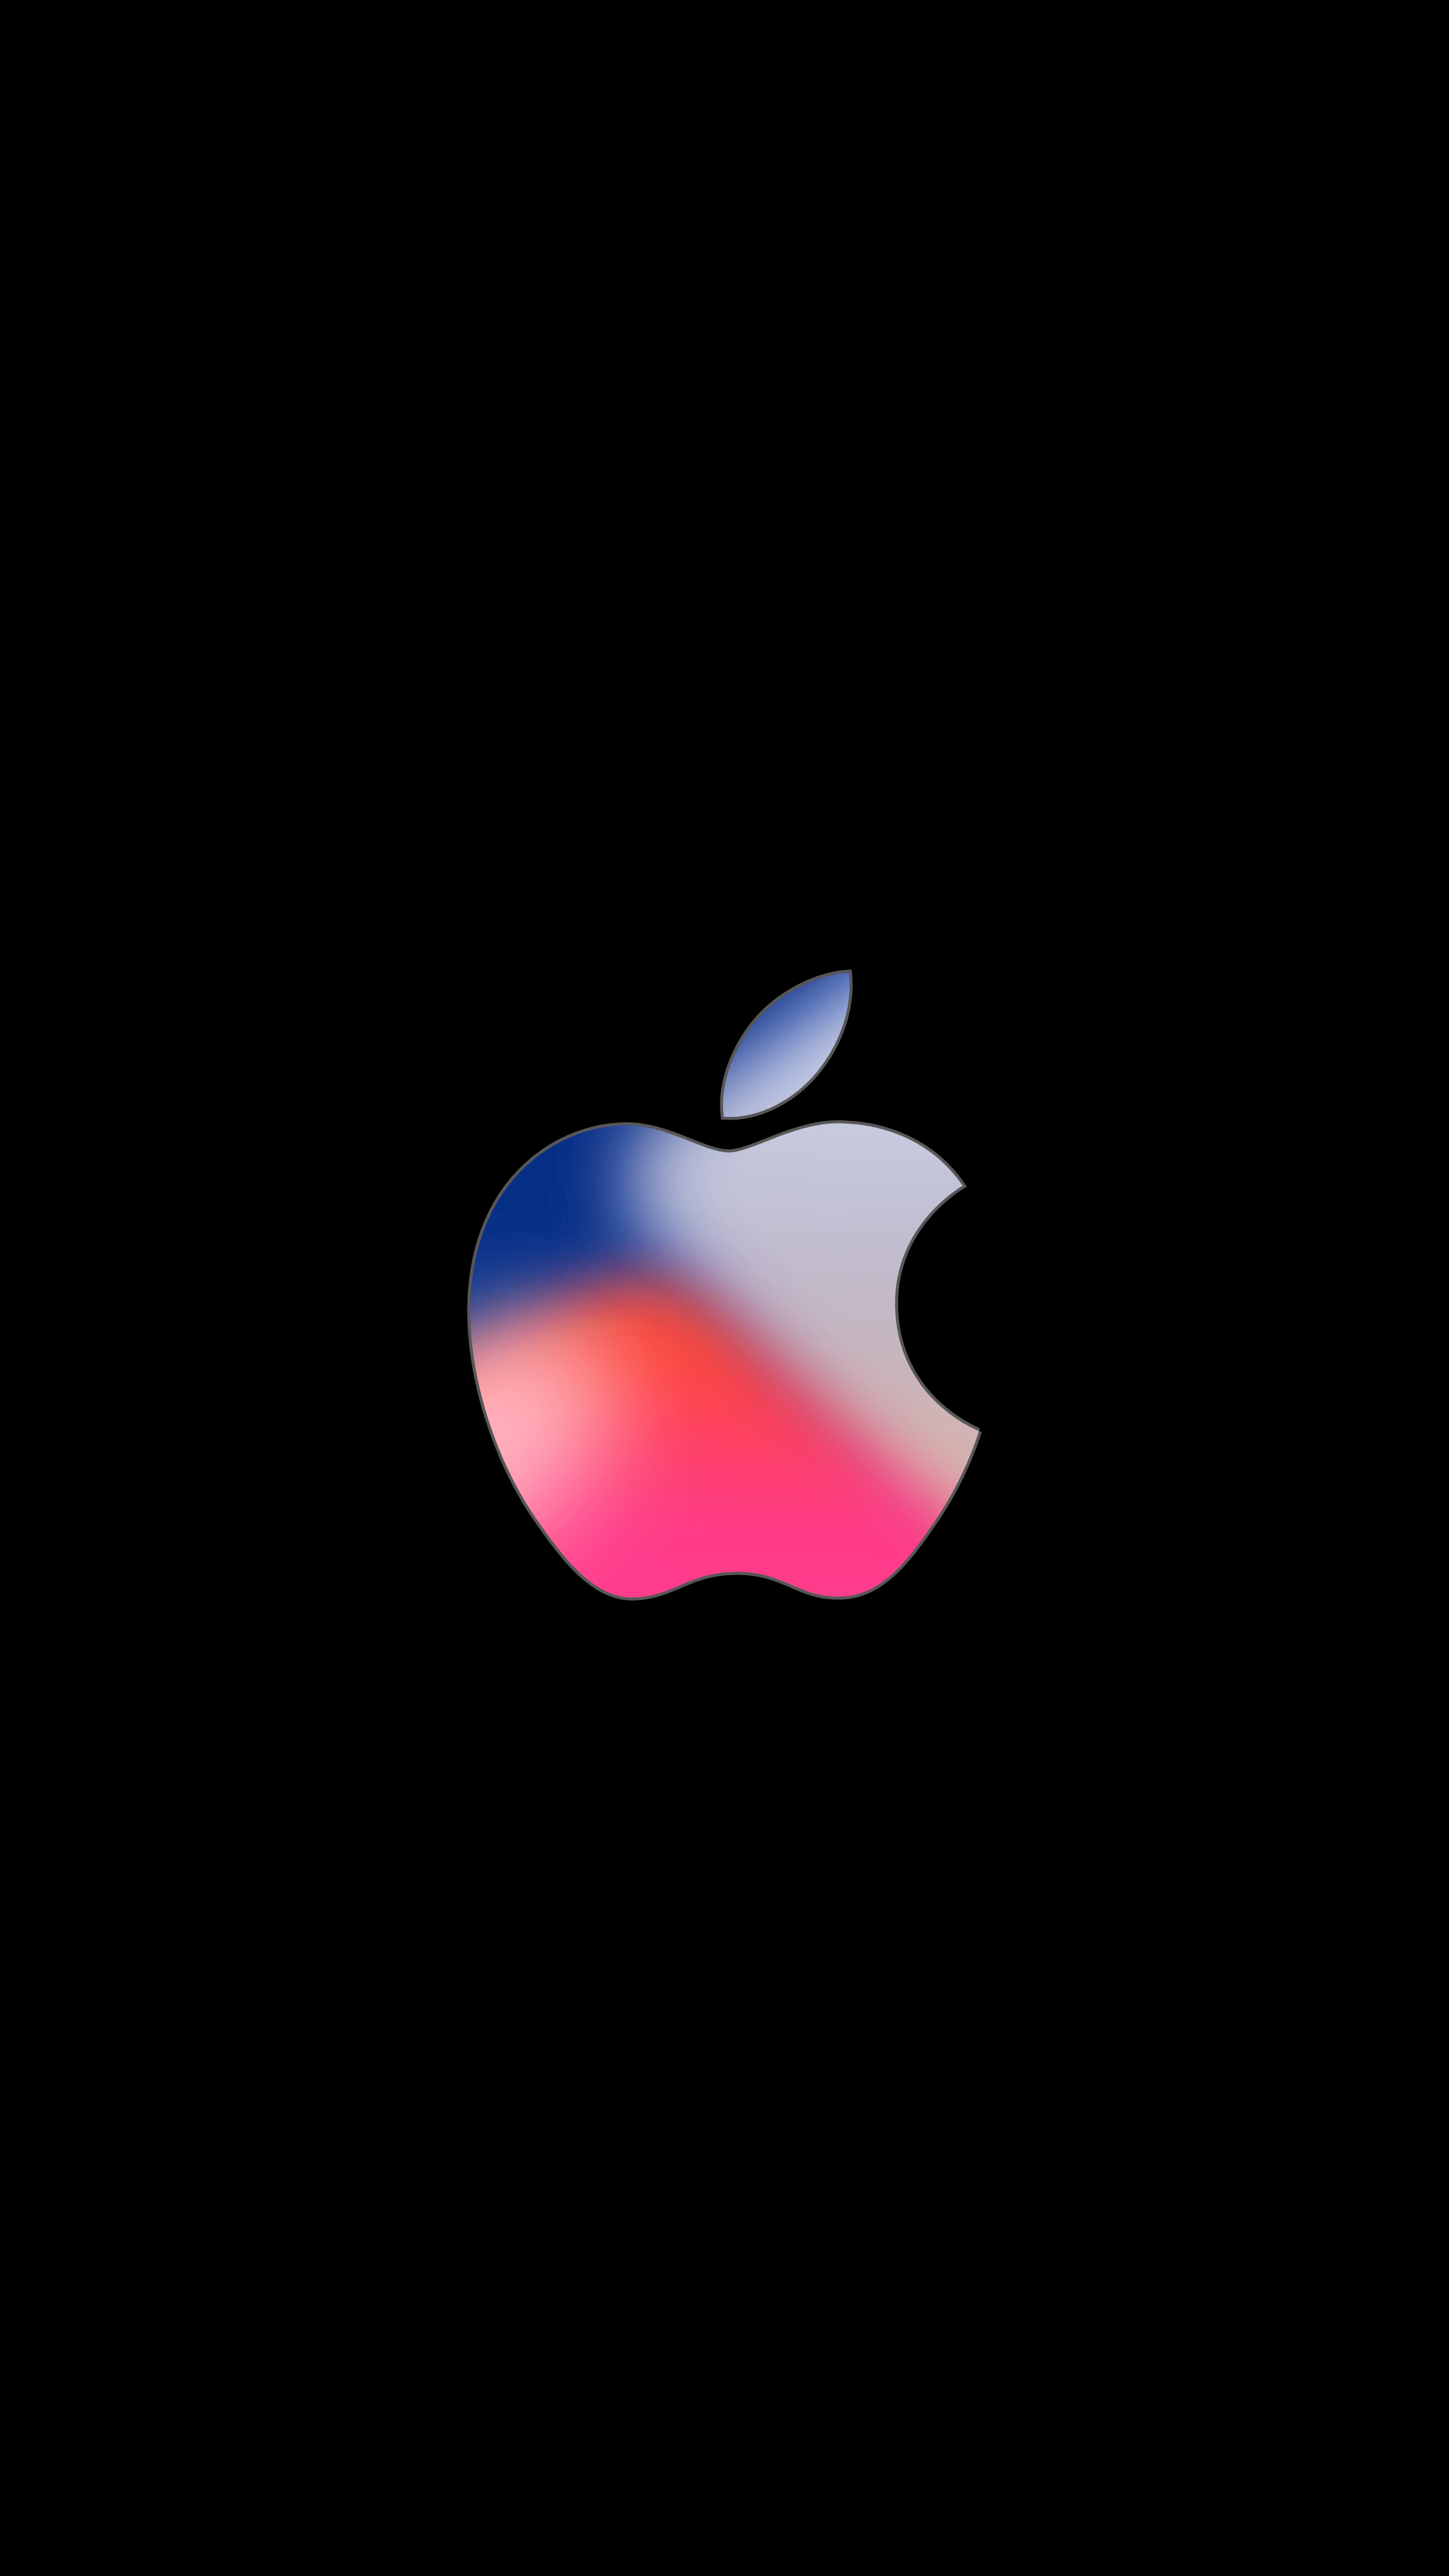 Apple 4k iPhone X Wallpapers - Wallpaper Cave